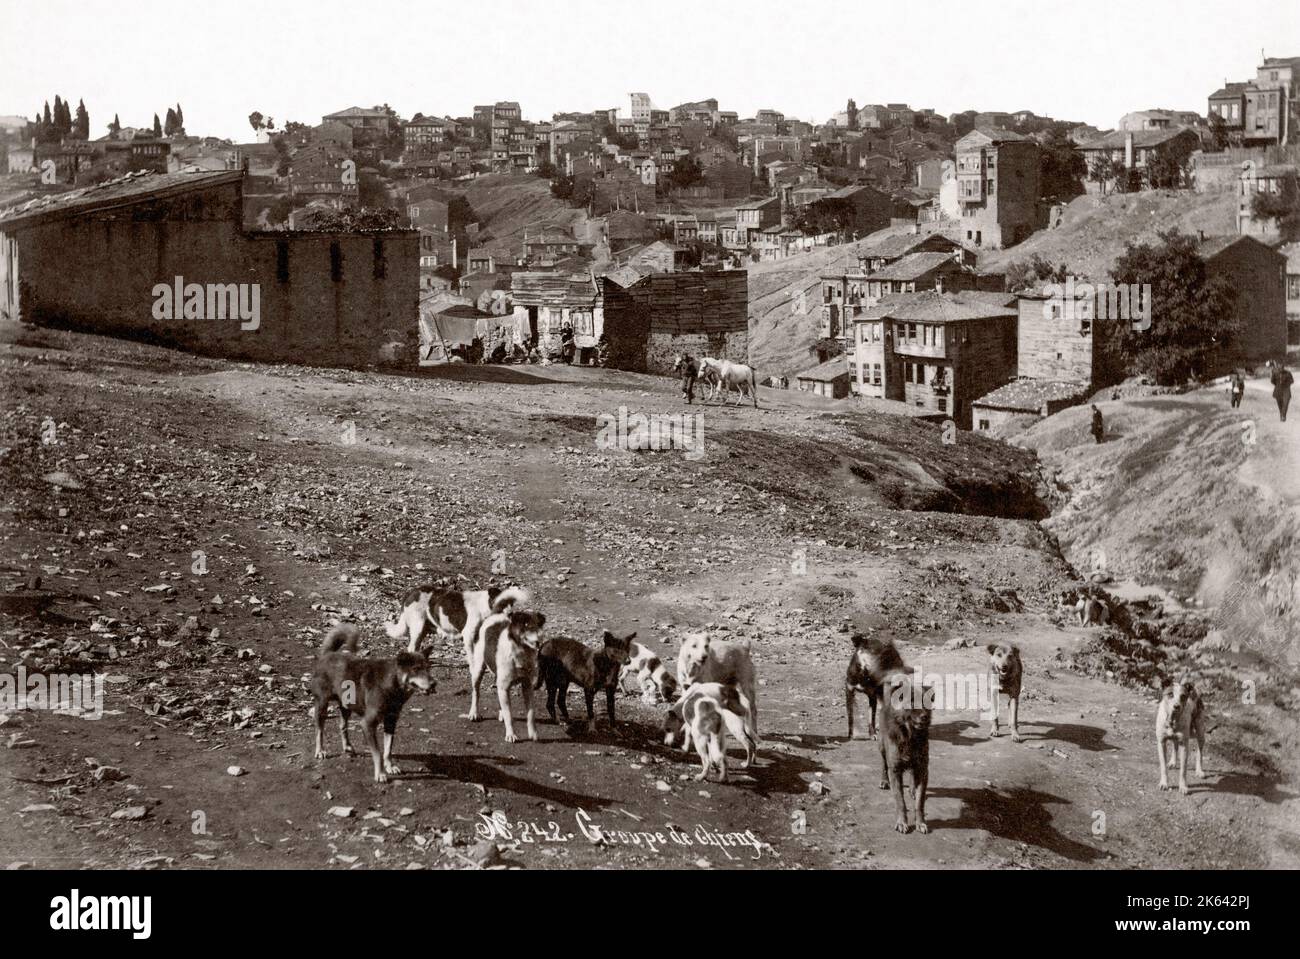 c.1890s Turkey - group of street dogs Stock Photo